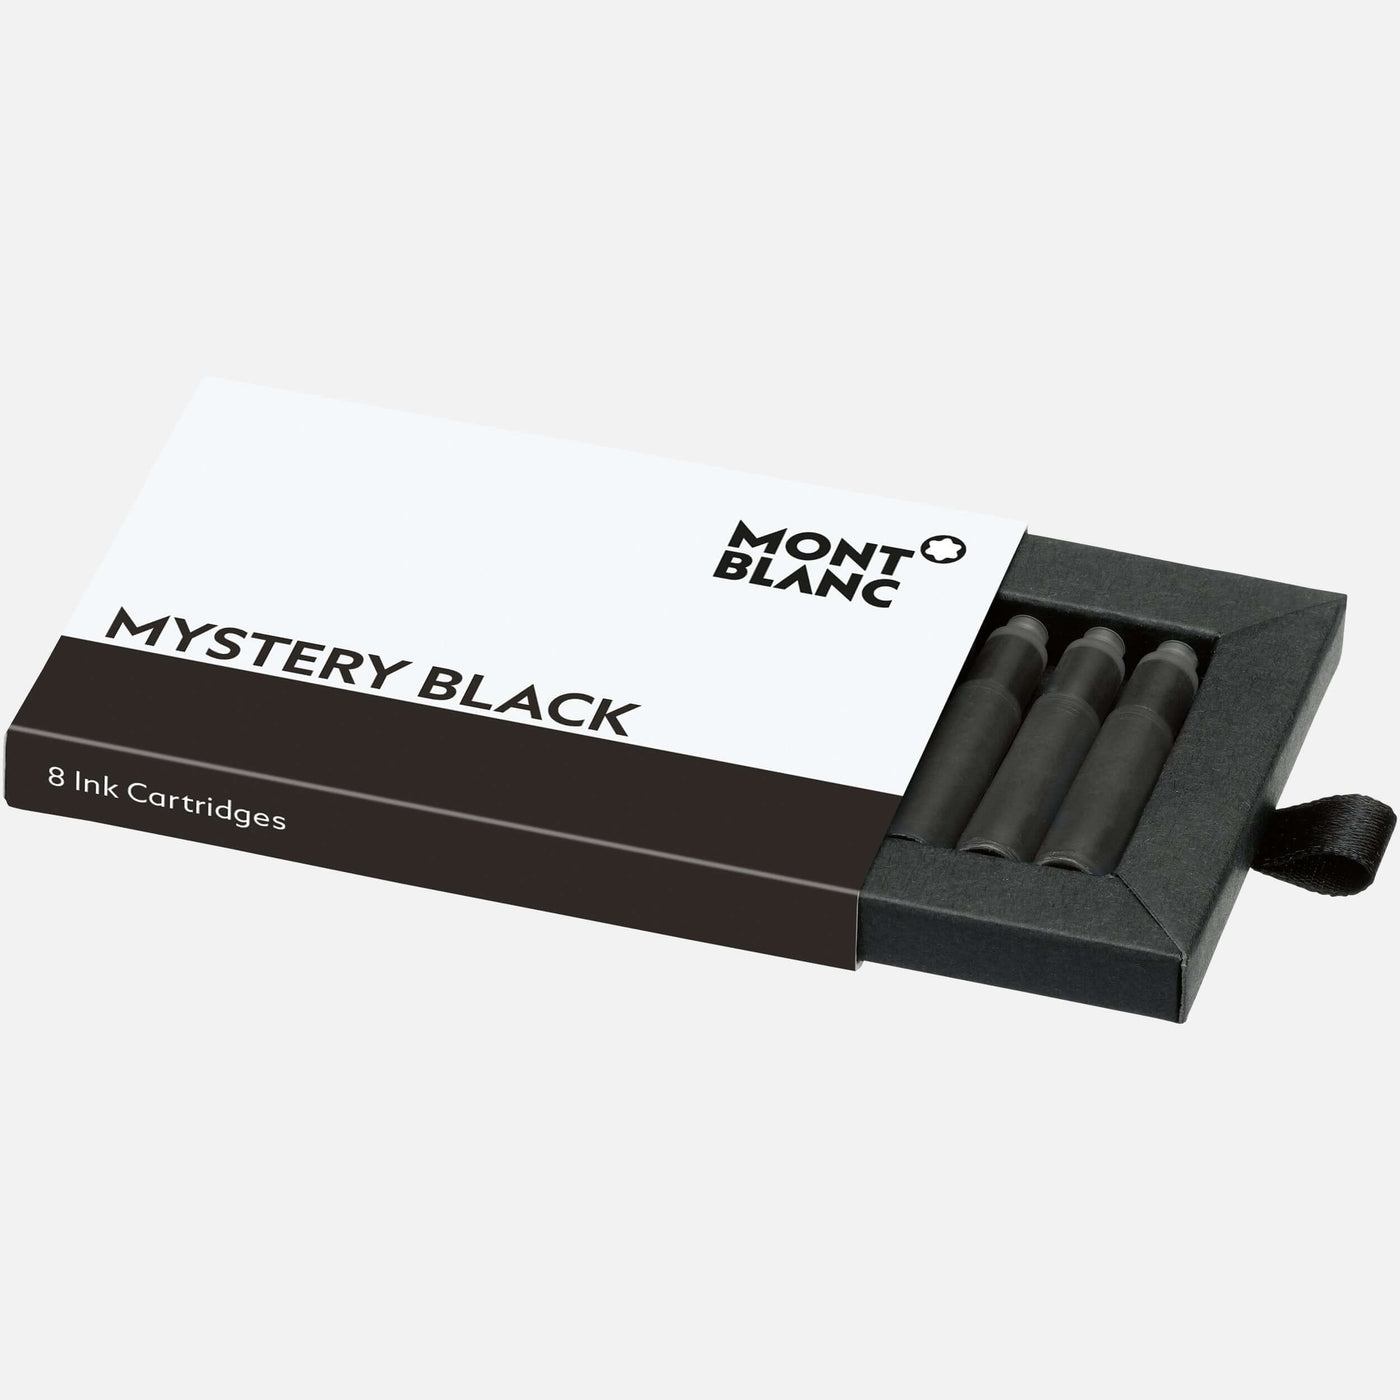 Refill Montblanc Mystery Black Ink Cartridges | Pen Store | Pen Place